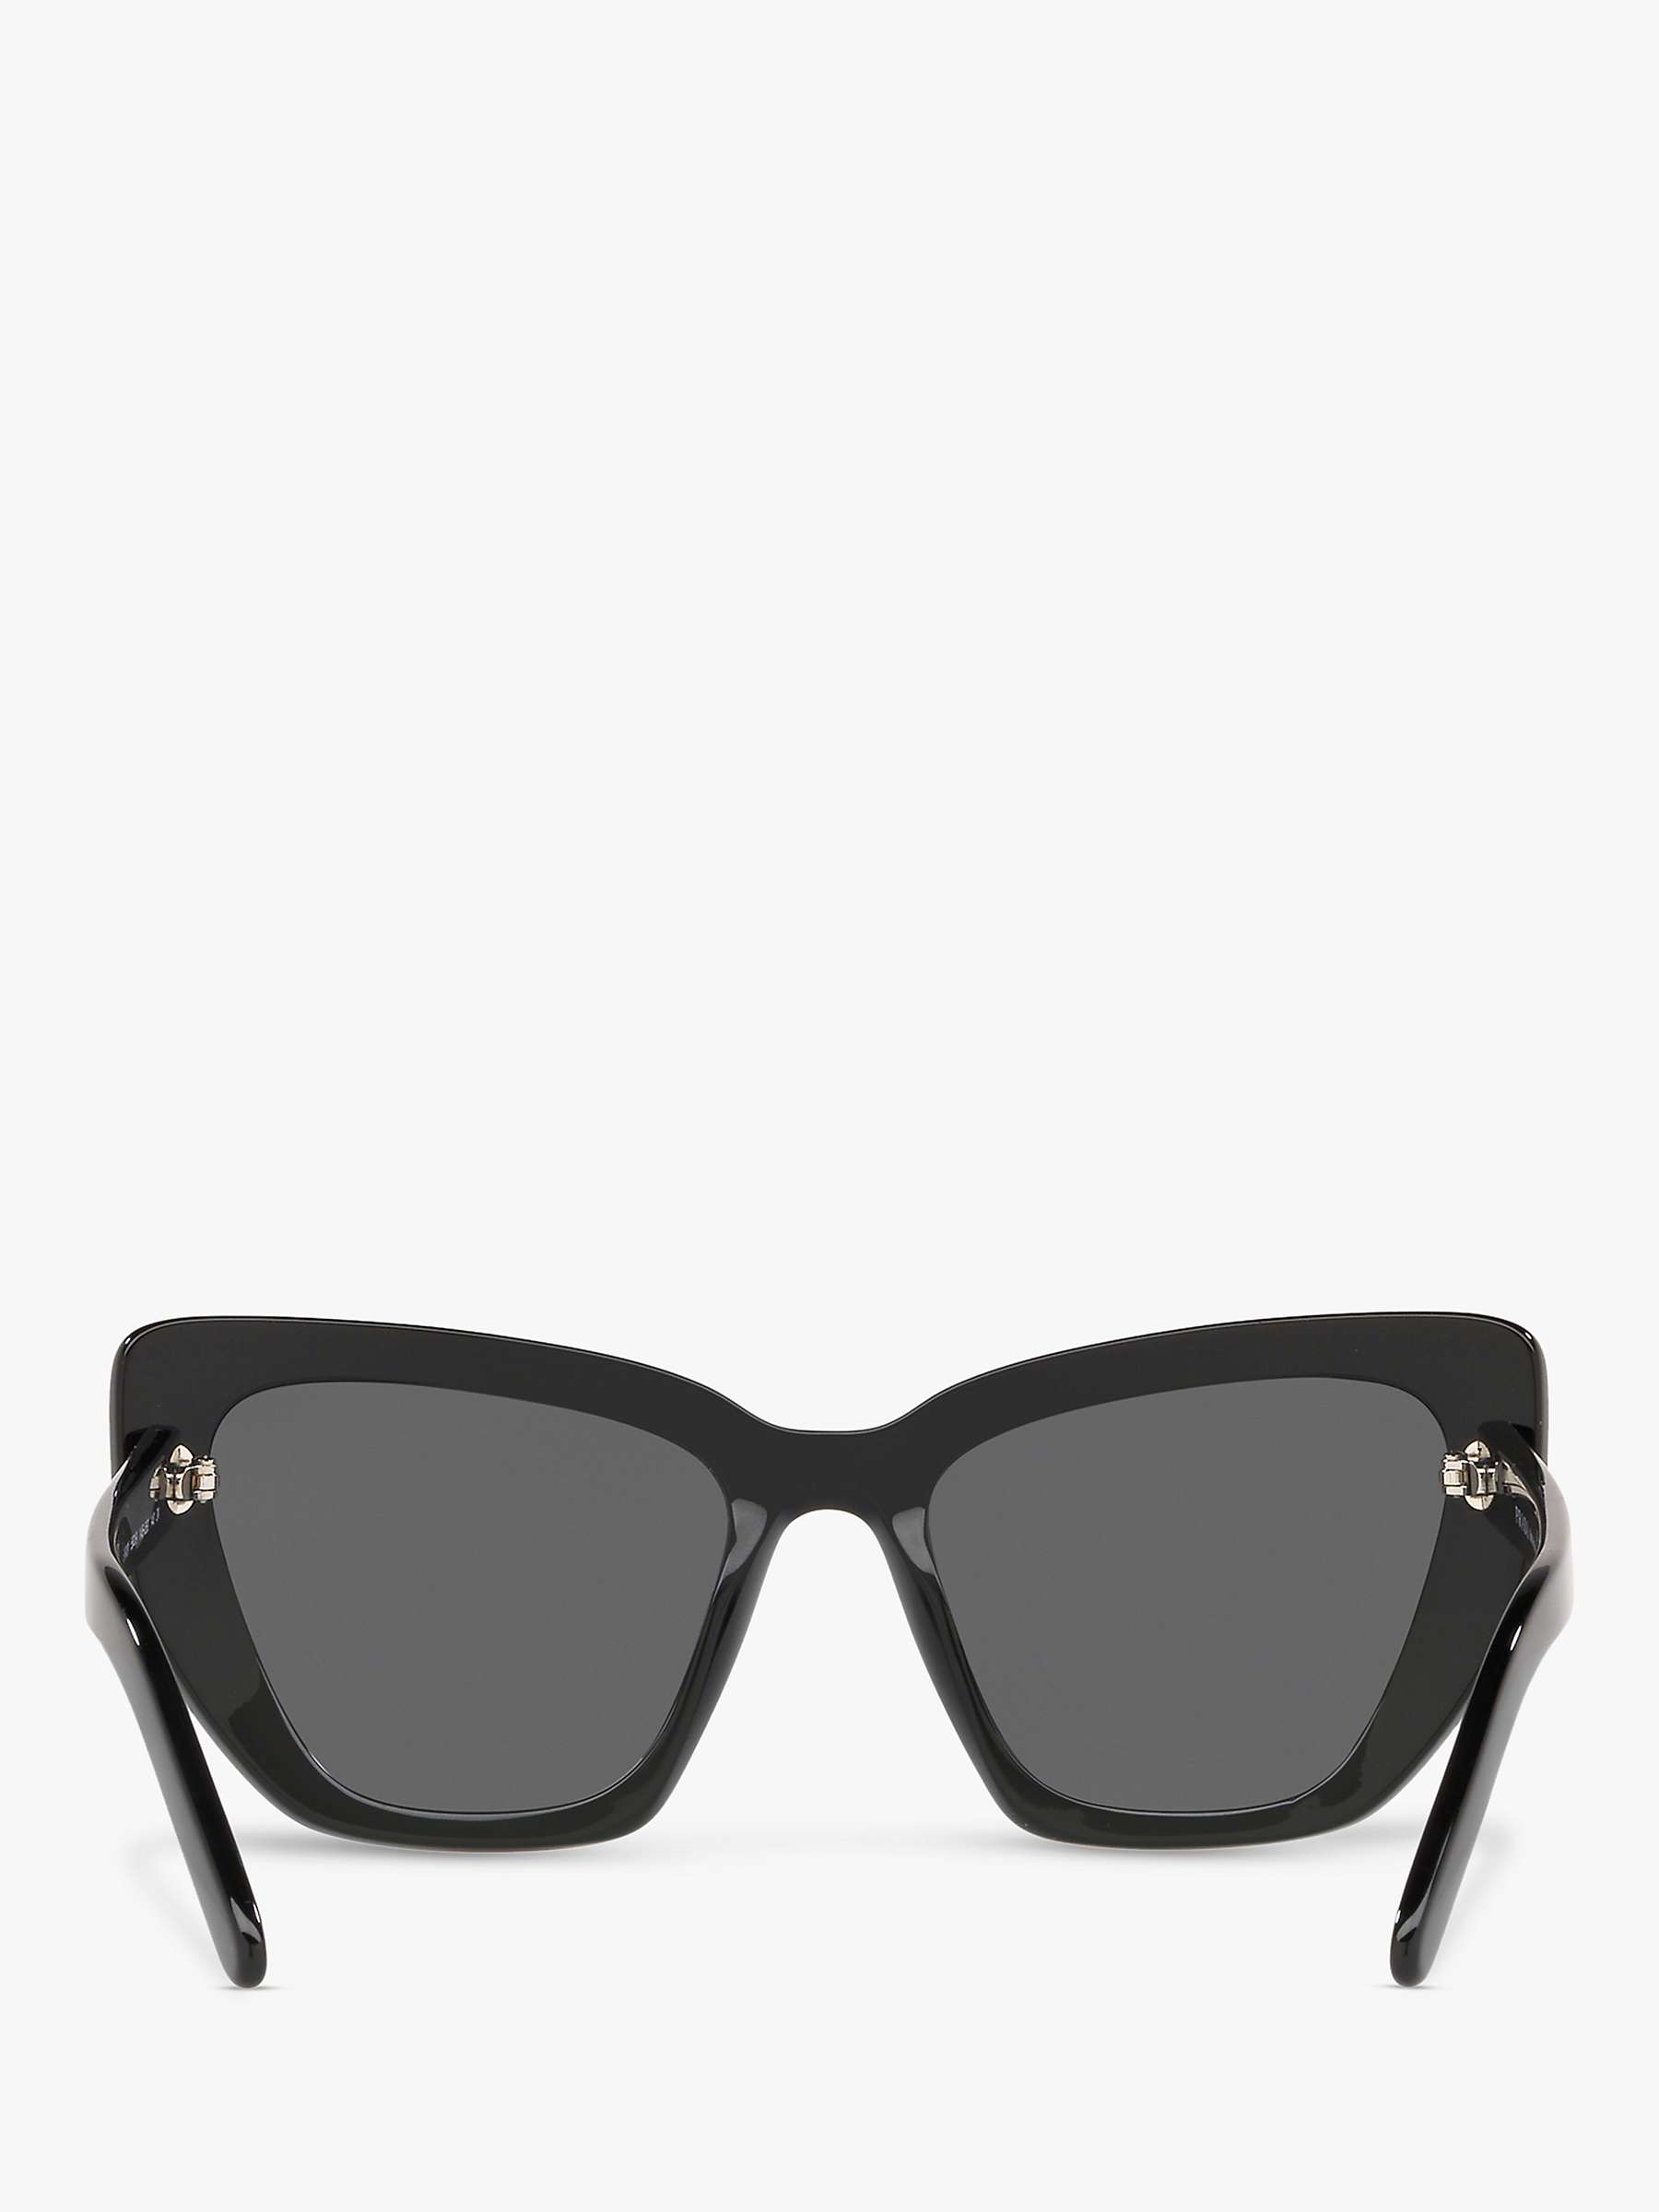 Buy Prada PR 08VS Women's Cat's Eye Sunglasses Online at johnlewis.com